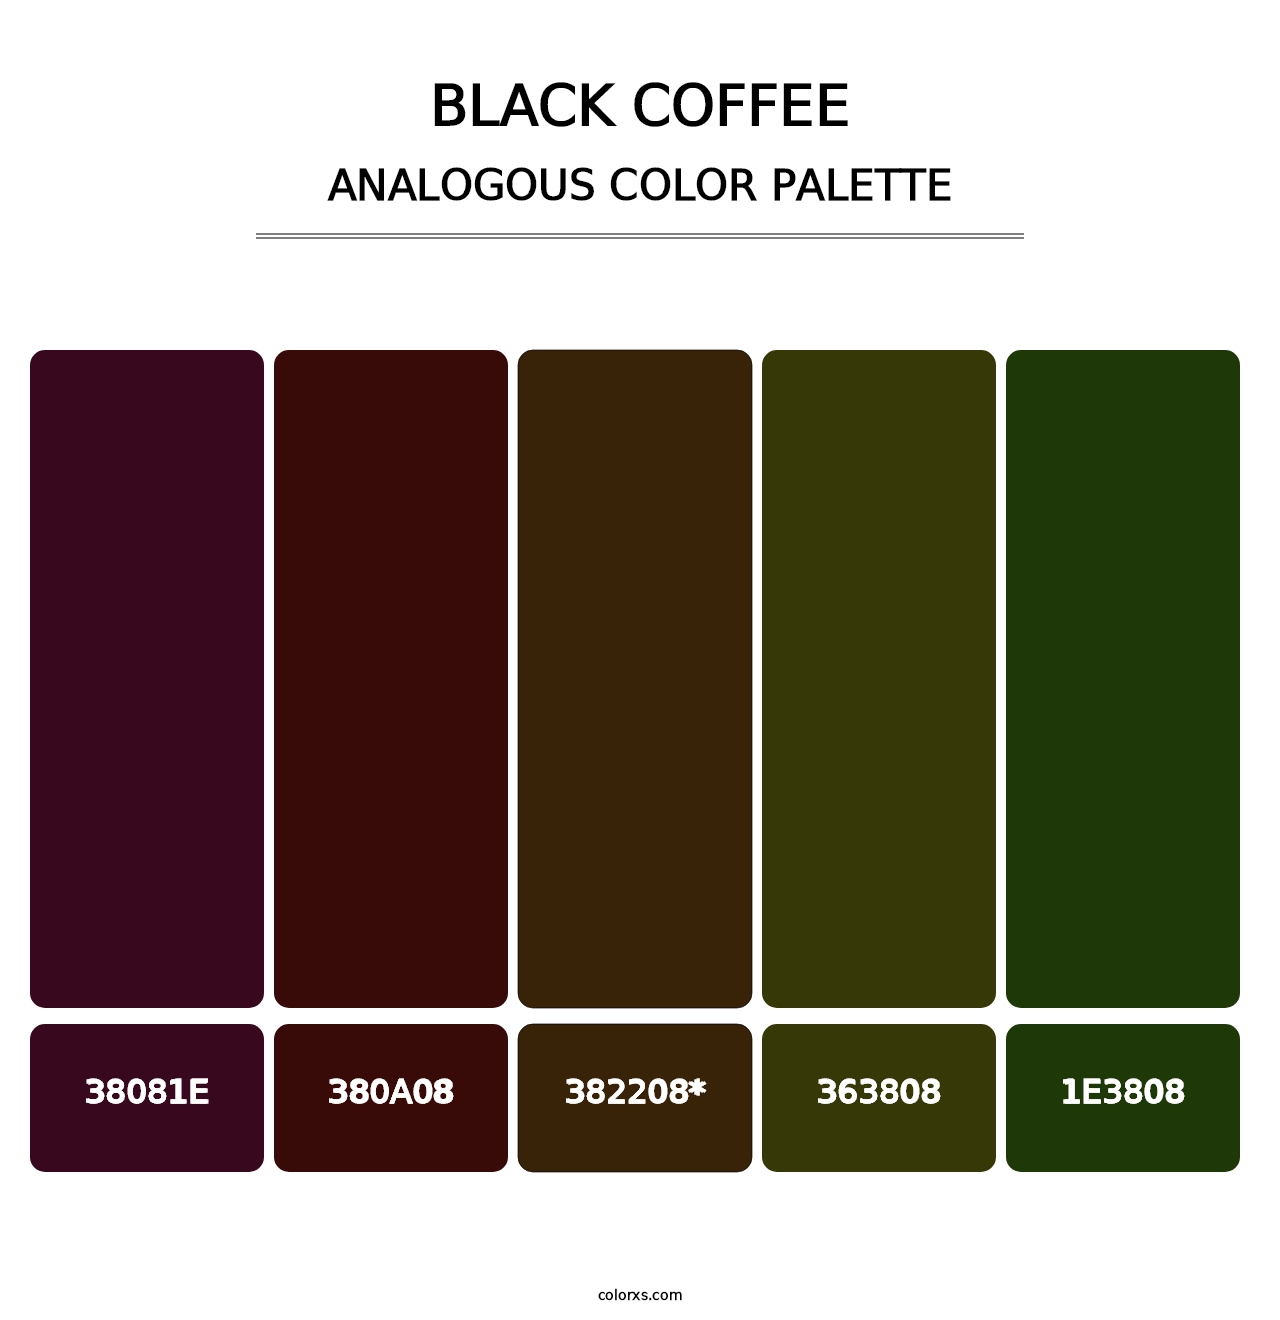 Black Coffee - Analogous Color Palette